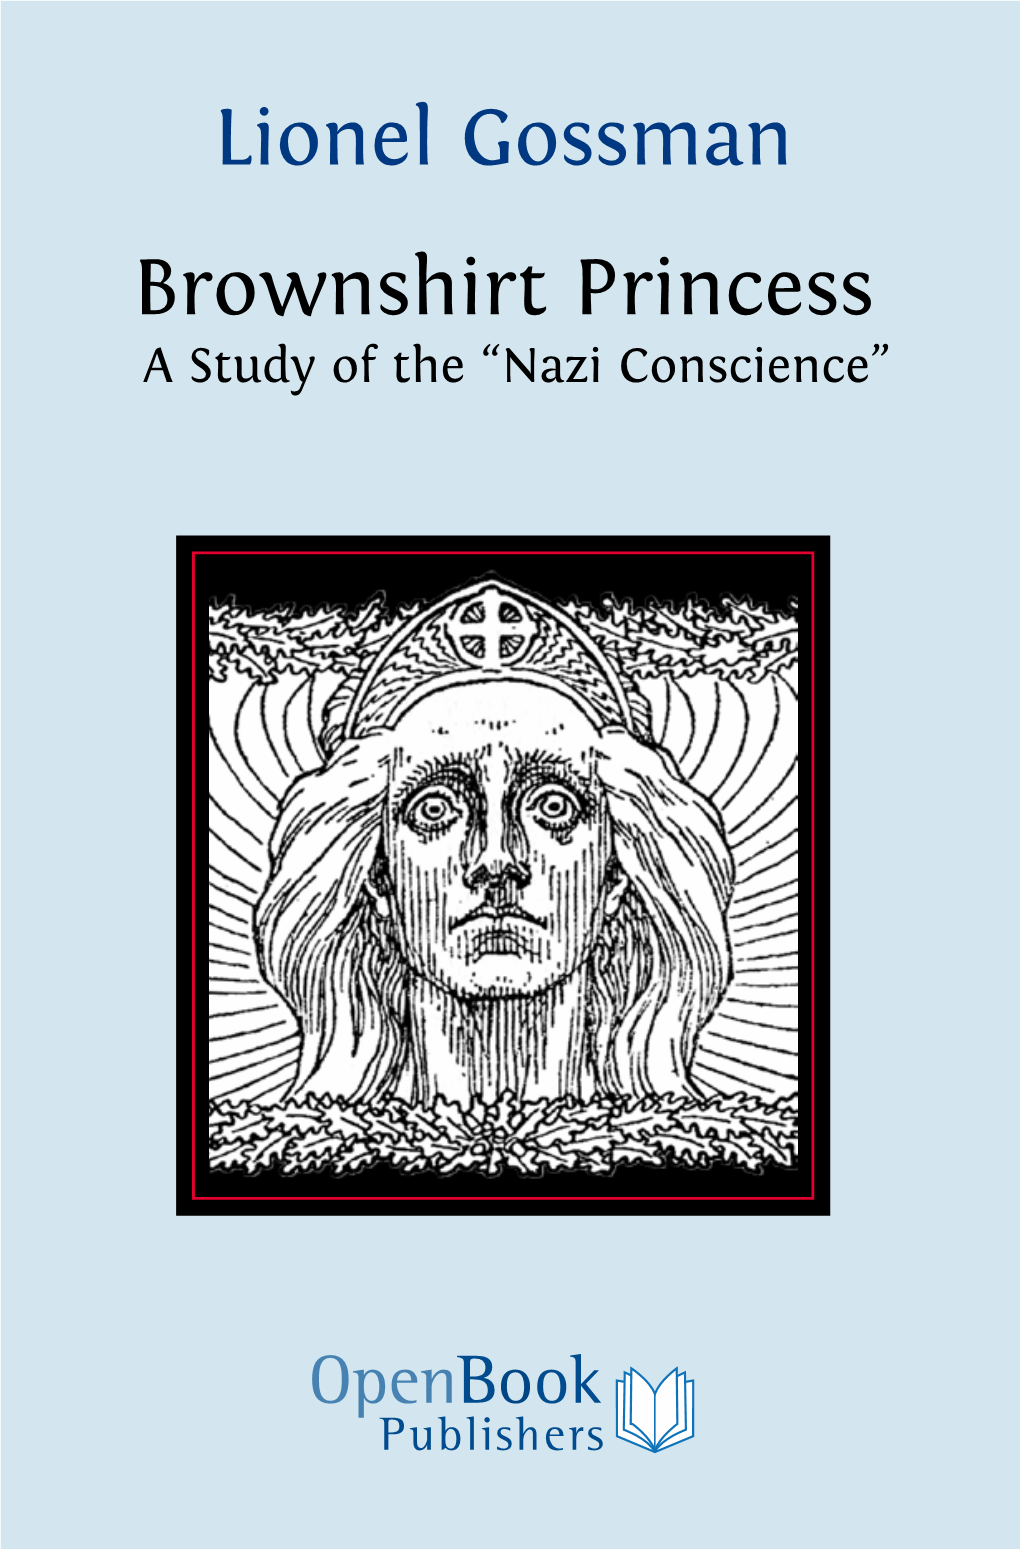 Lionel Gossman Brownshirt Princess a Study of the “Nazi Conscience” BROWNSHIRT PRINCESS